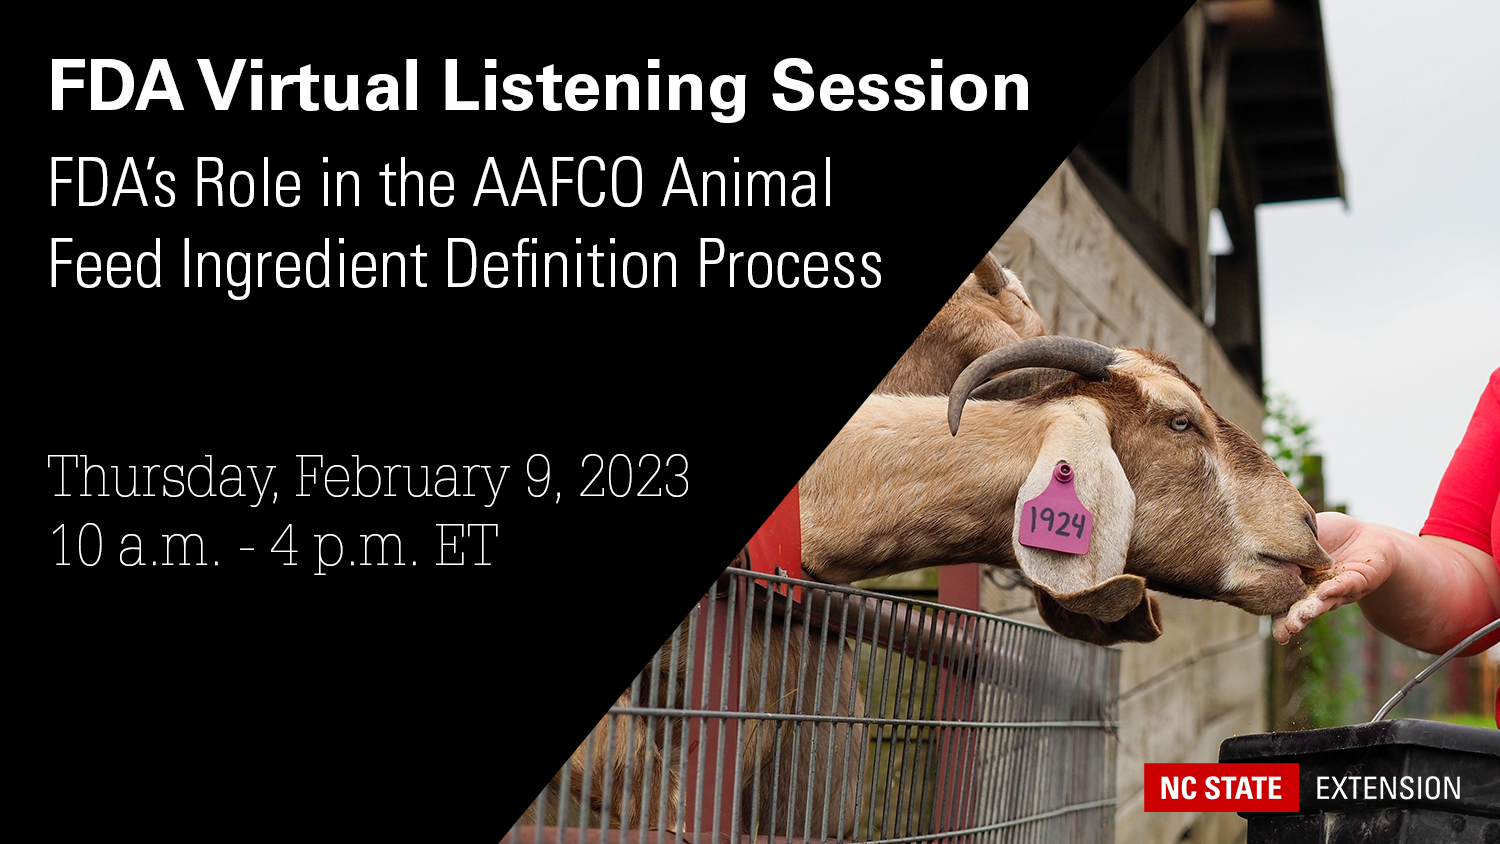 FDA Listening Session Banner Image